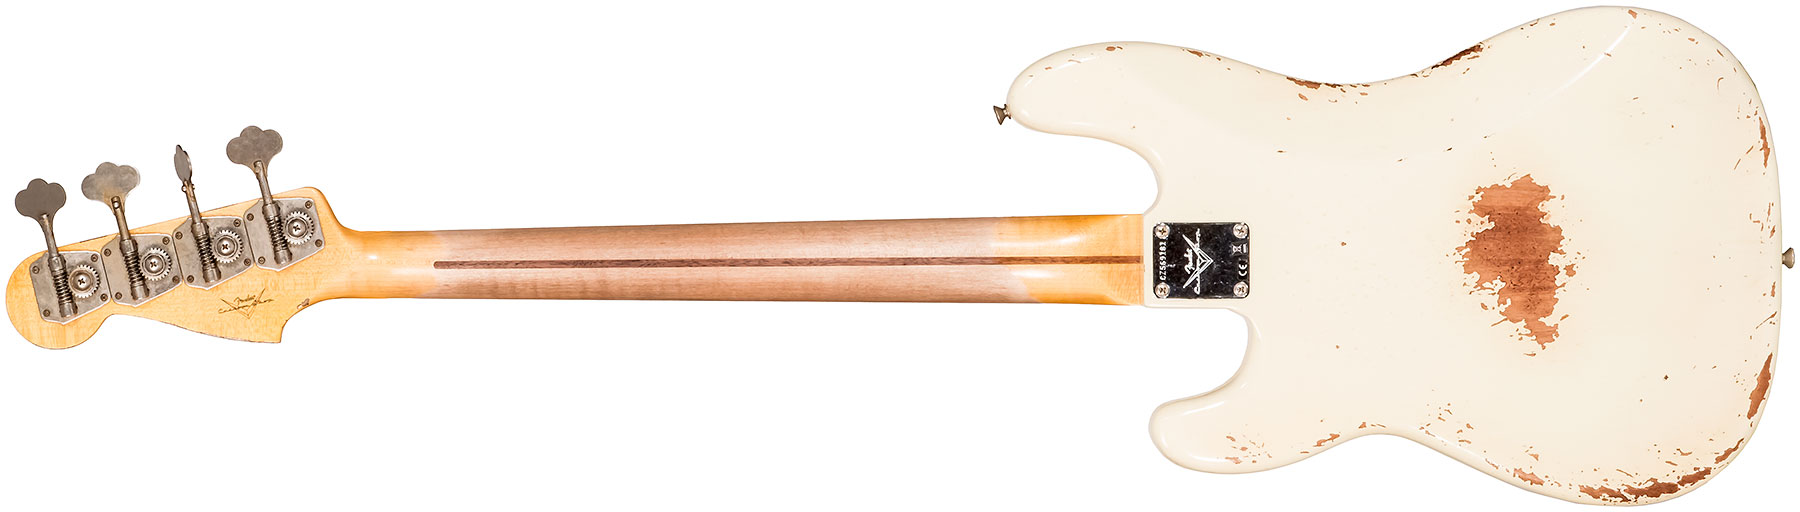 Fender Custom Shop Precision Bass 1958 Mn #cz569181 - Heavy Relic Vintage White - Solid body elektrische bas - Variation 1